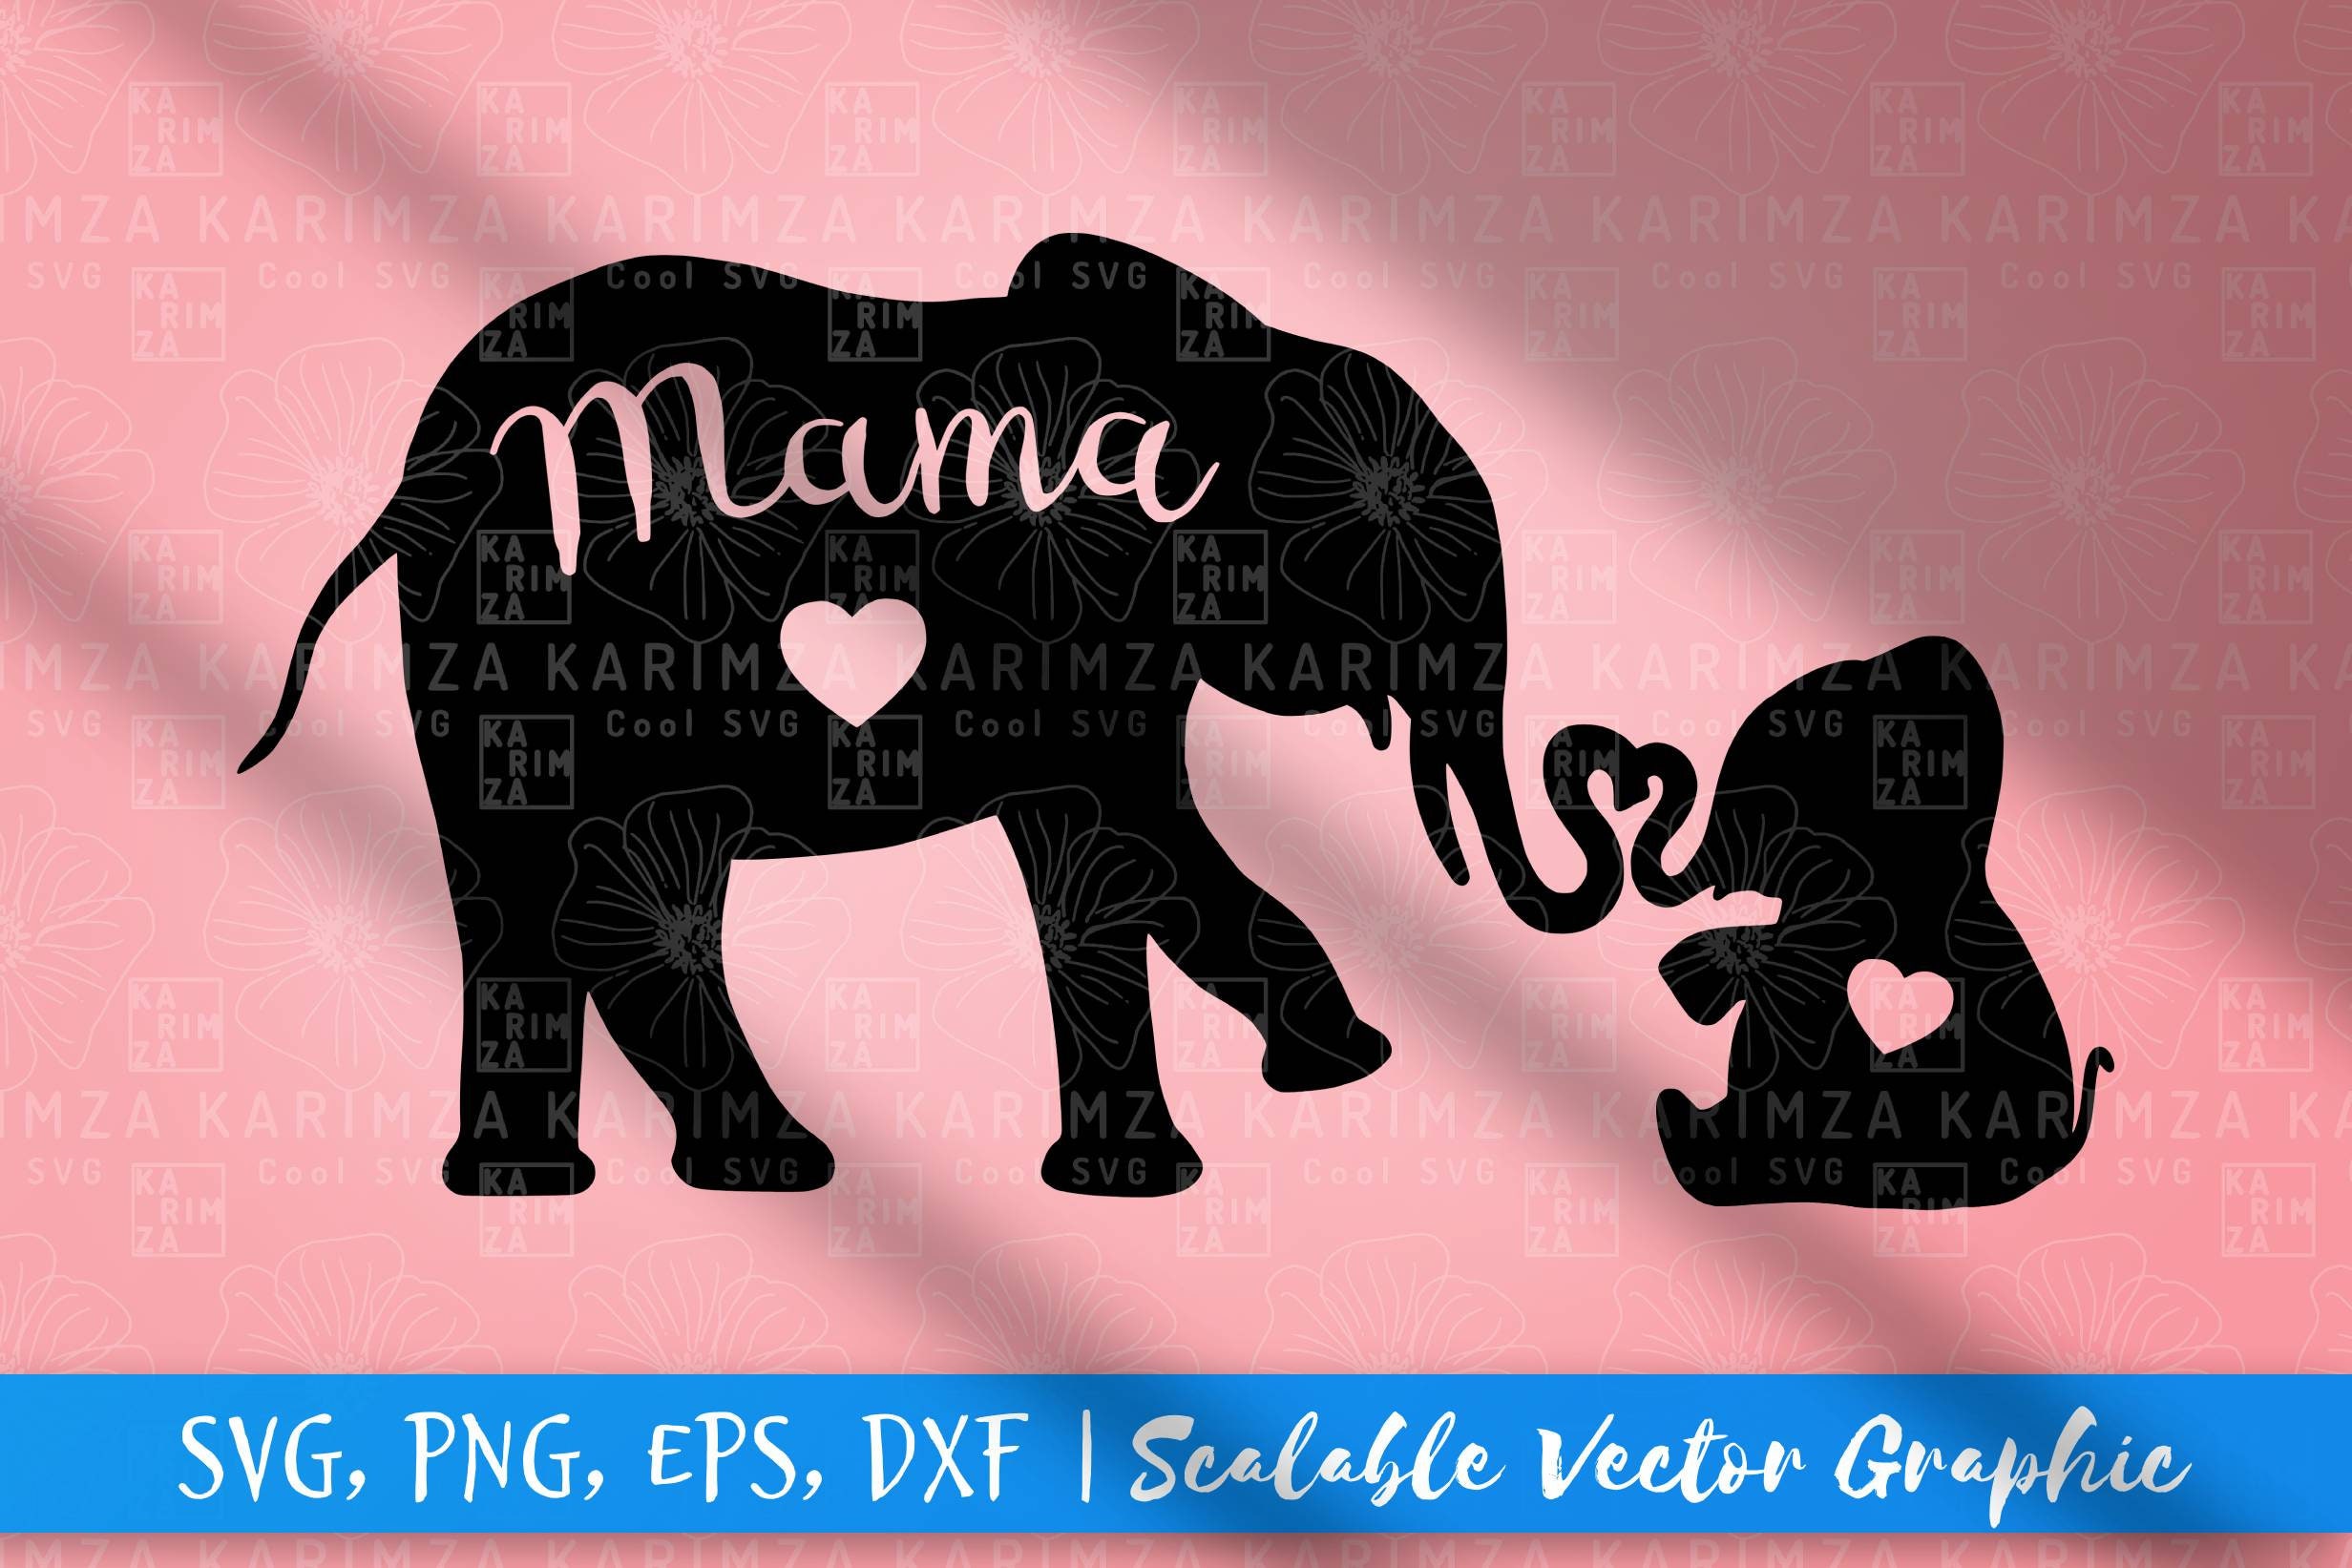 How To Make Mama & Baby Elephant Cricut Card Online